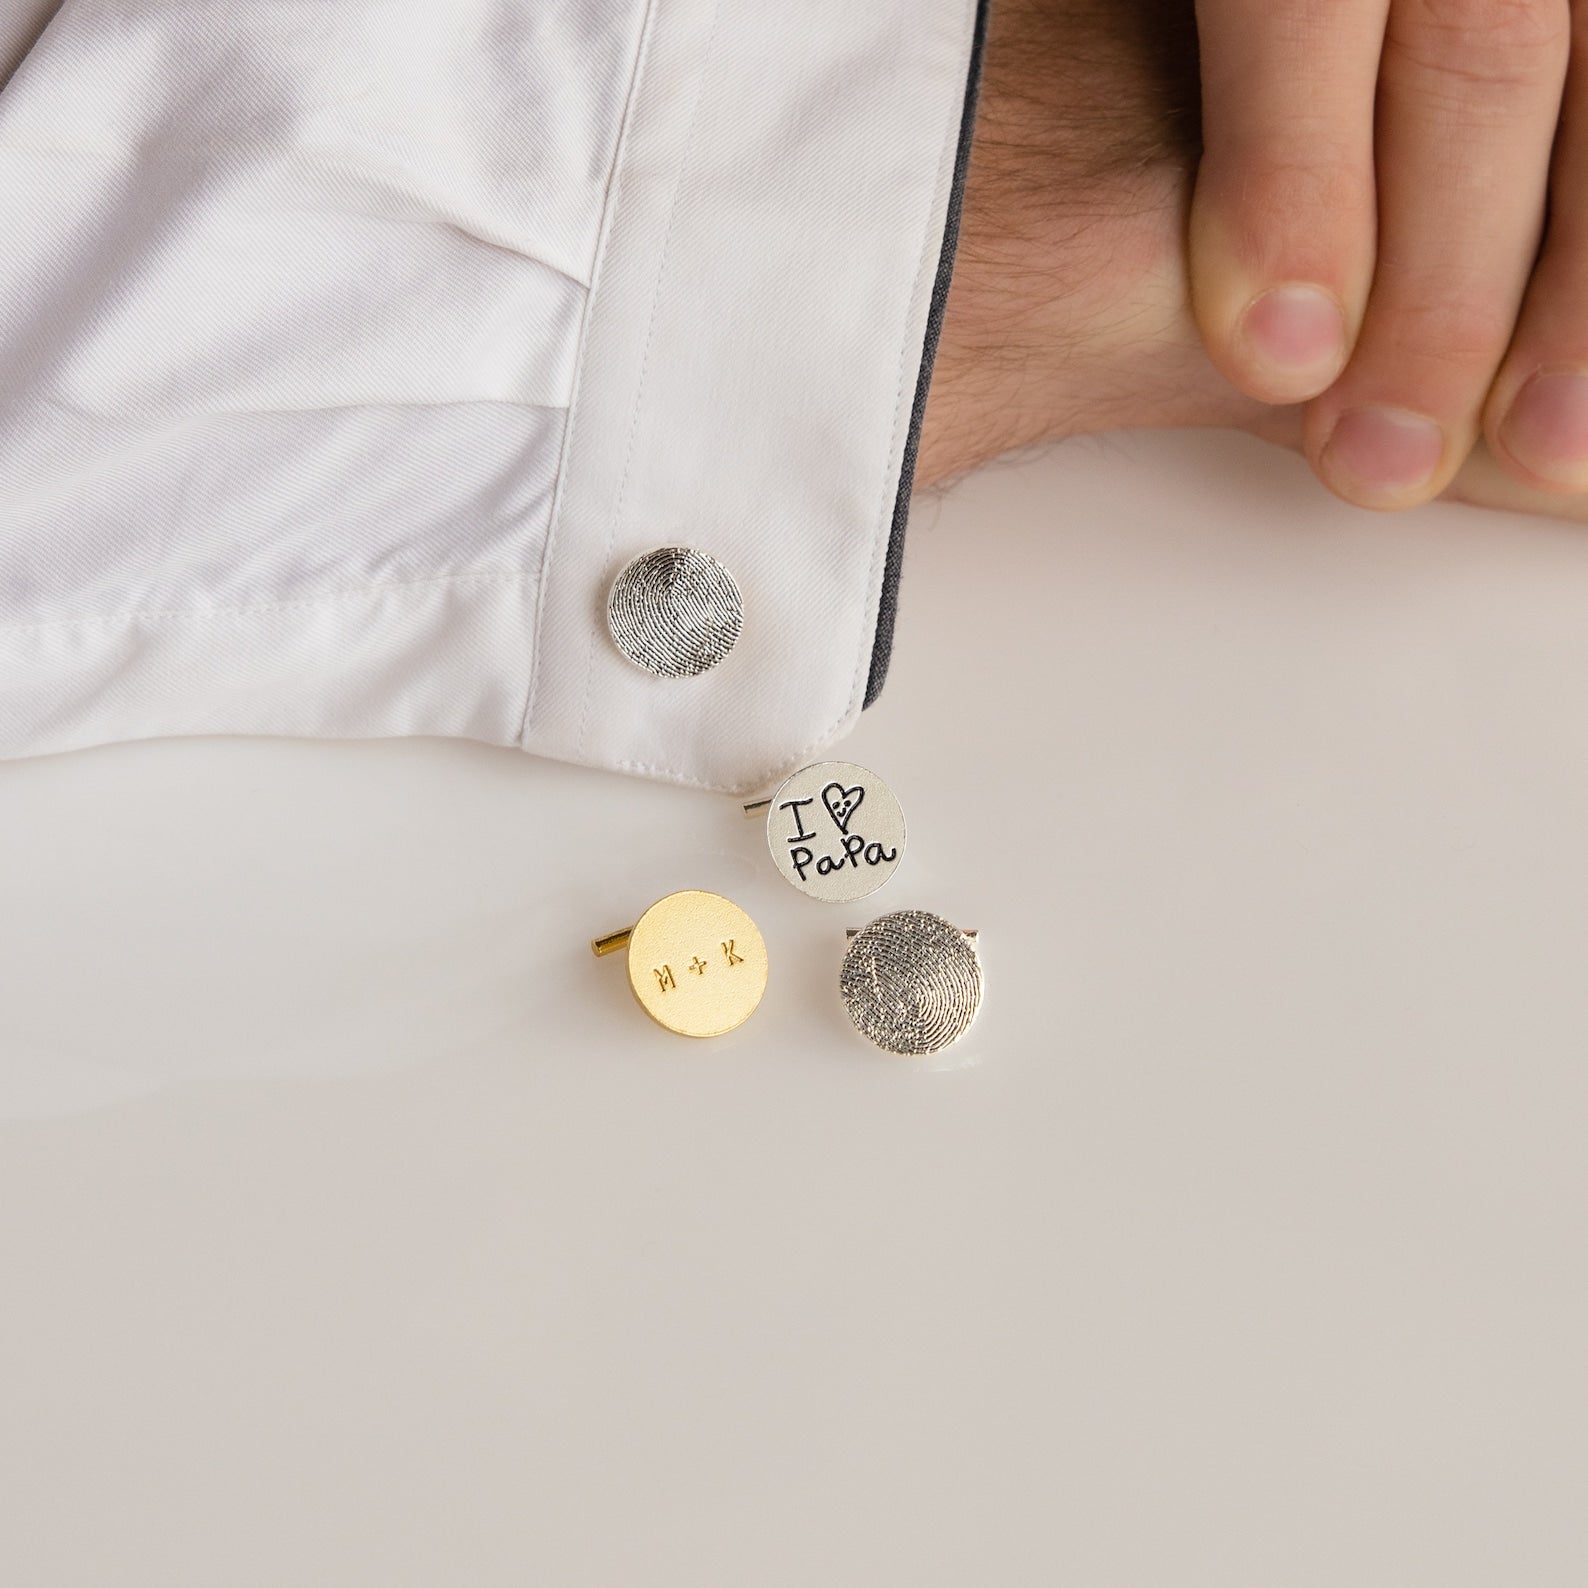  Personalized cufflinks for men, custom engraved